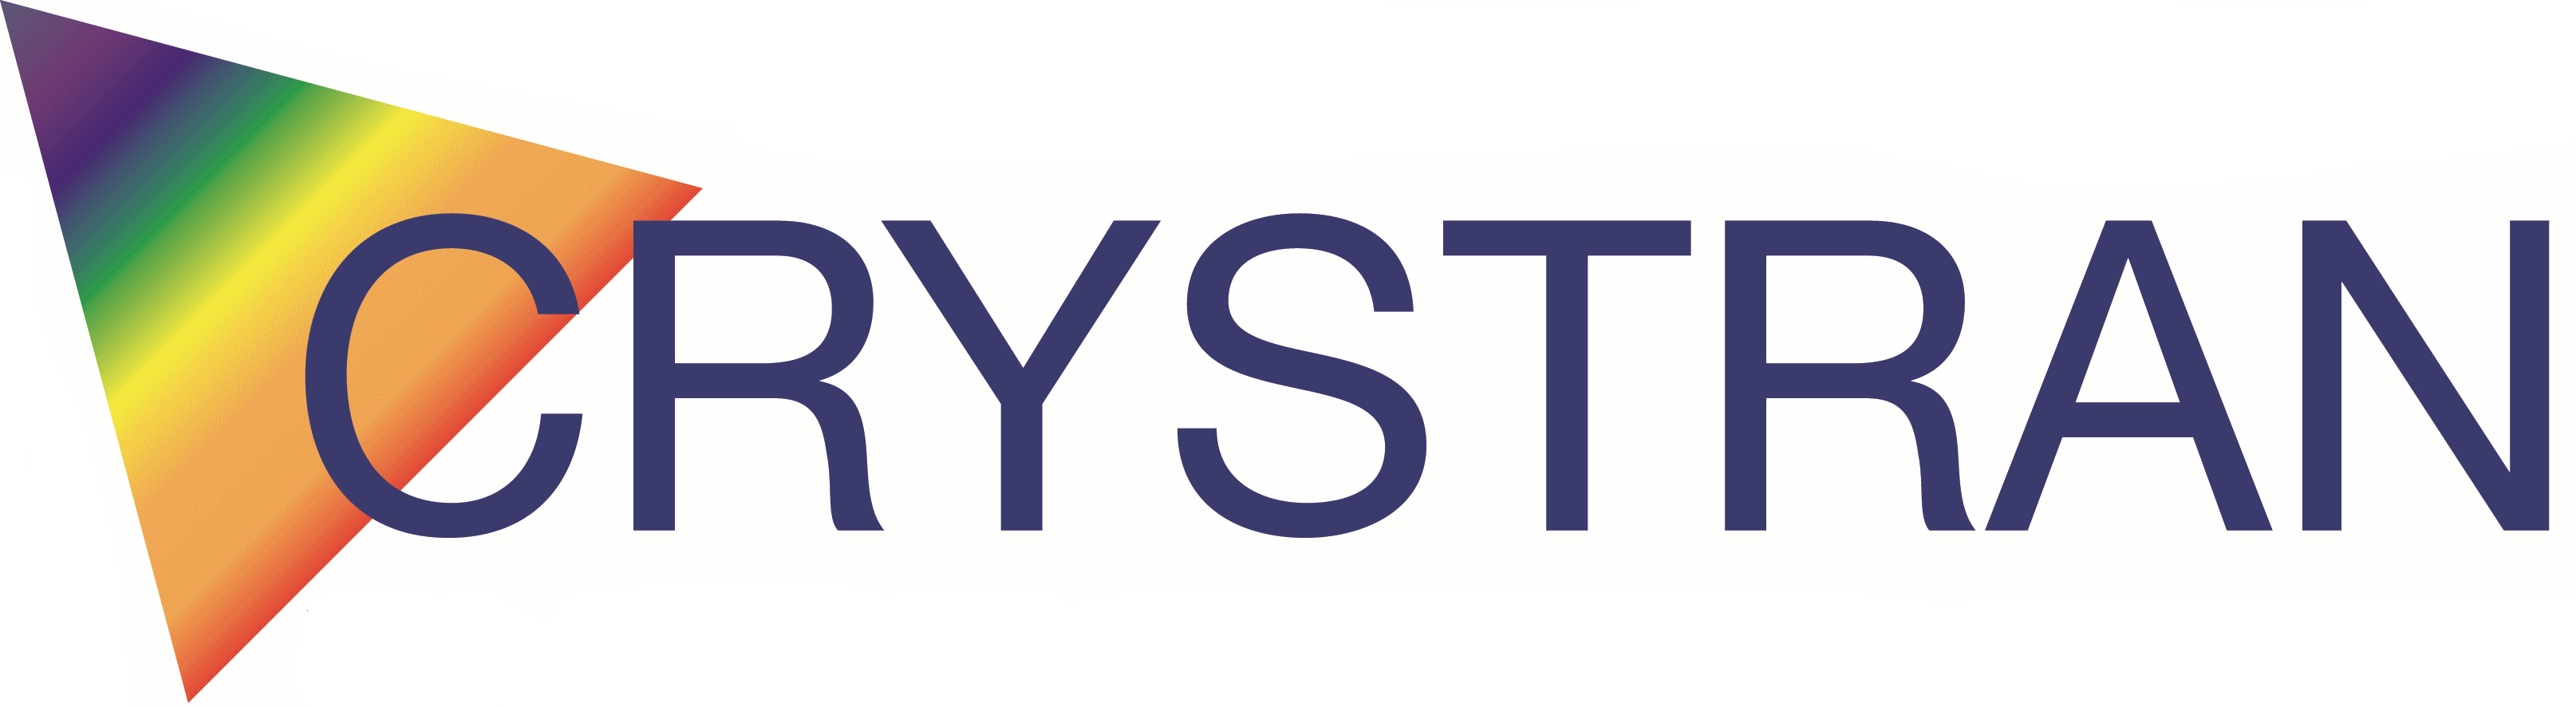 Crystran Ltd